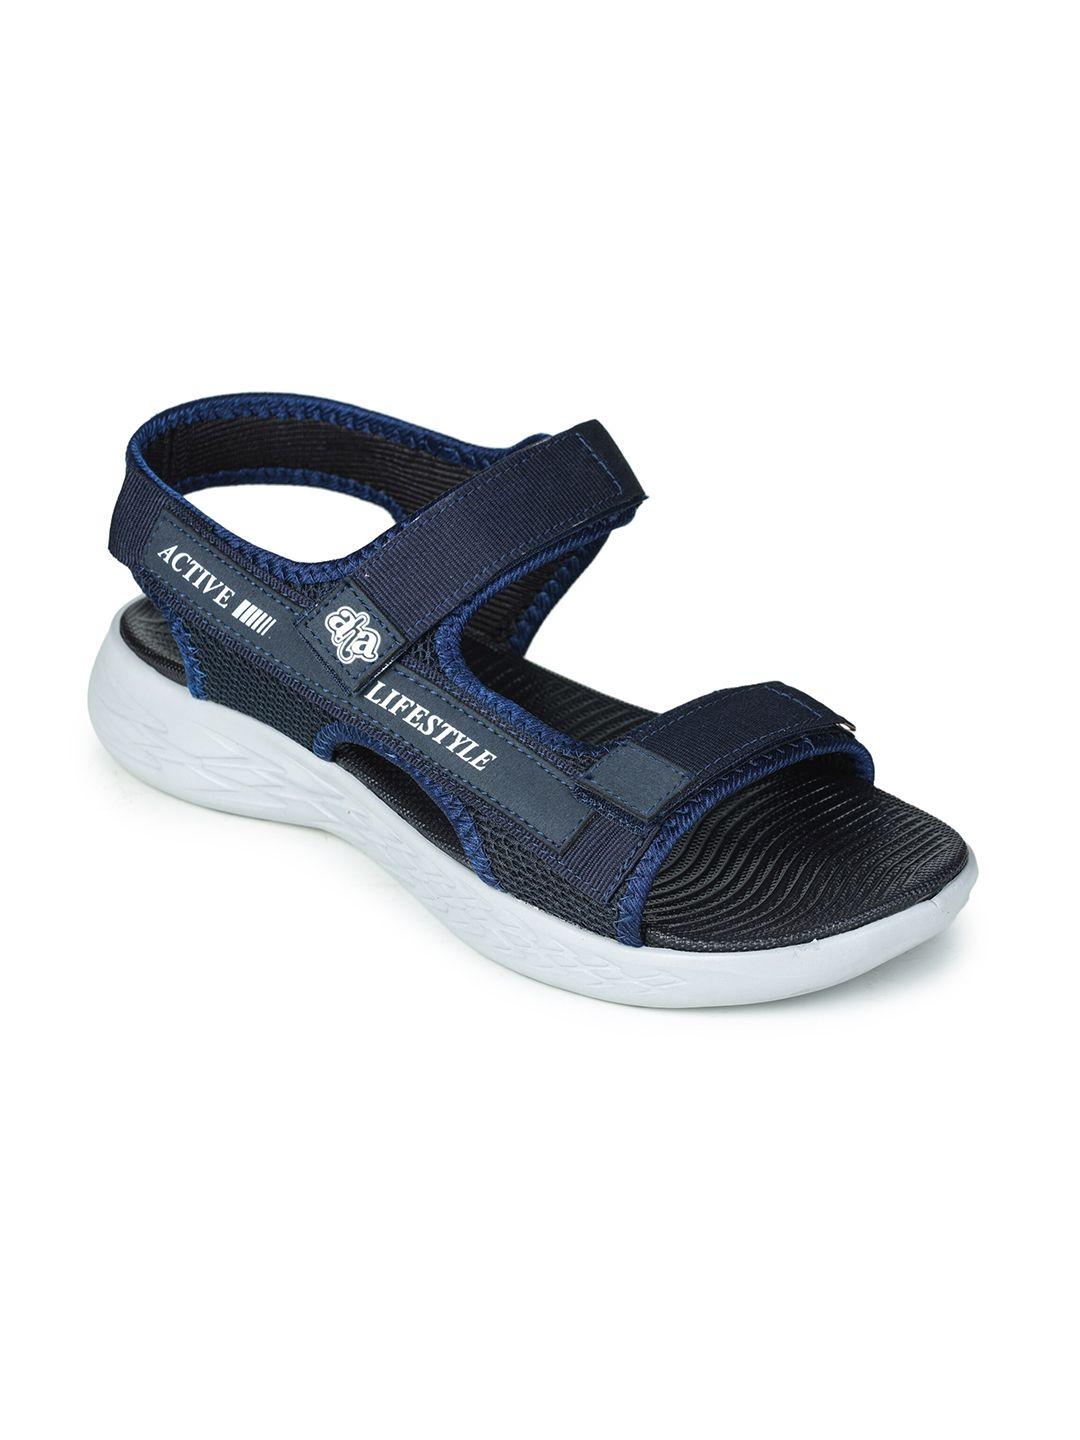 liberty-men-navy-blue-&-white-pu-comfort-sandals